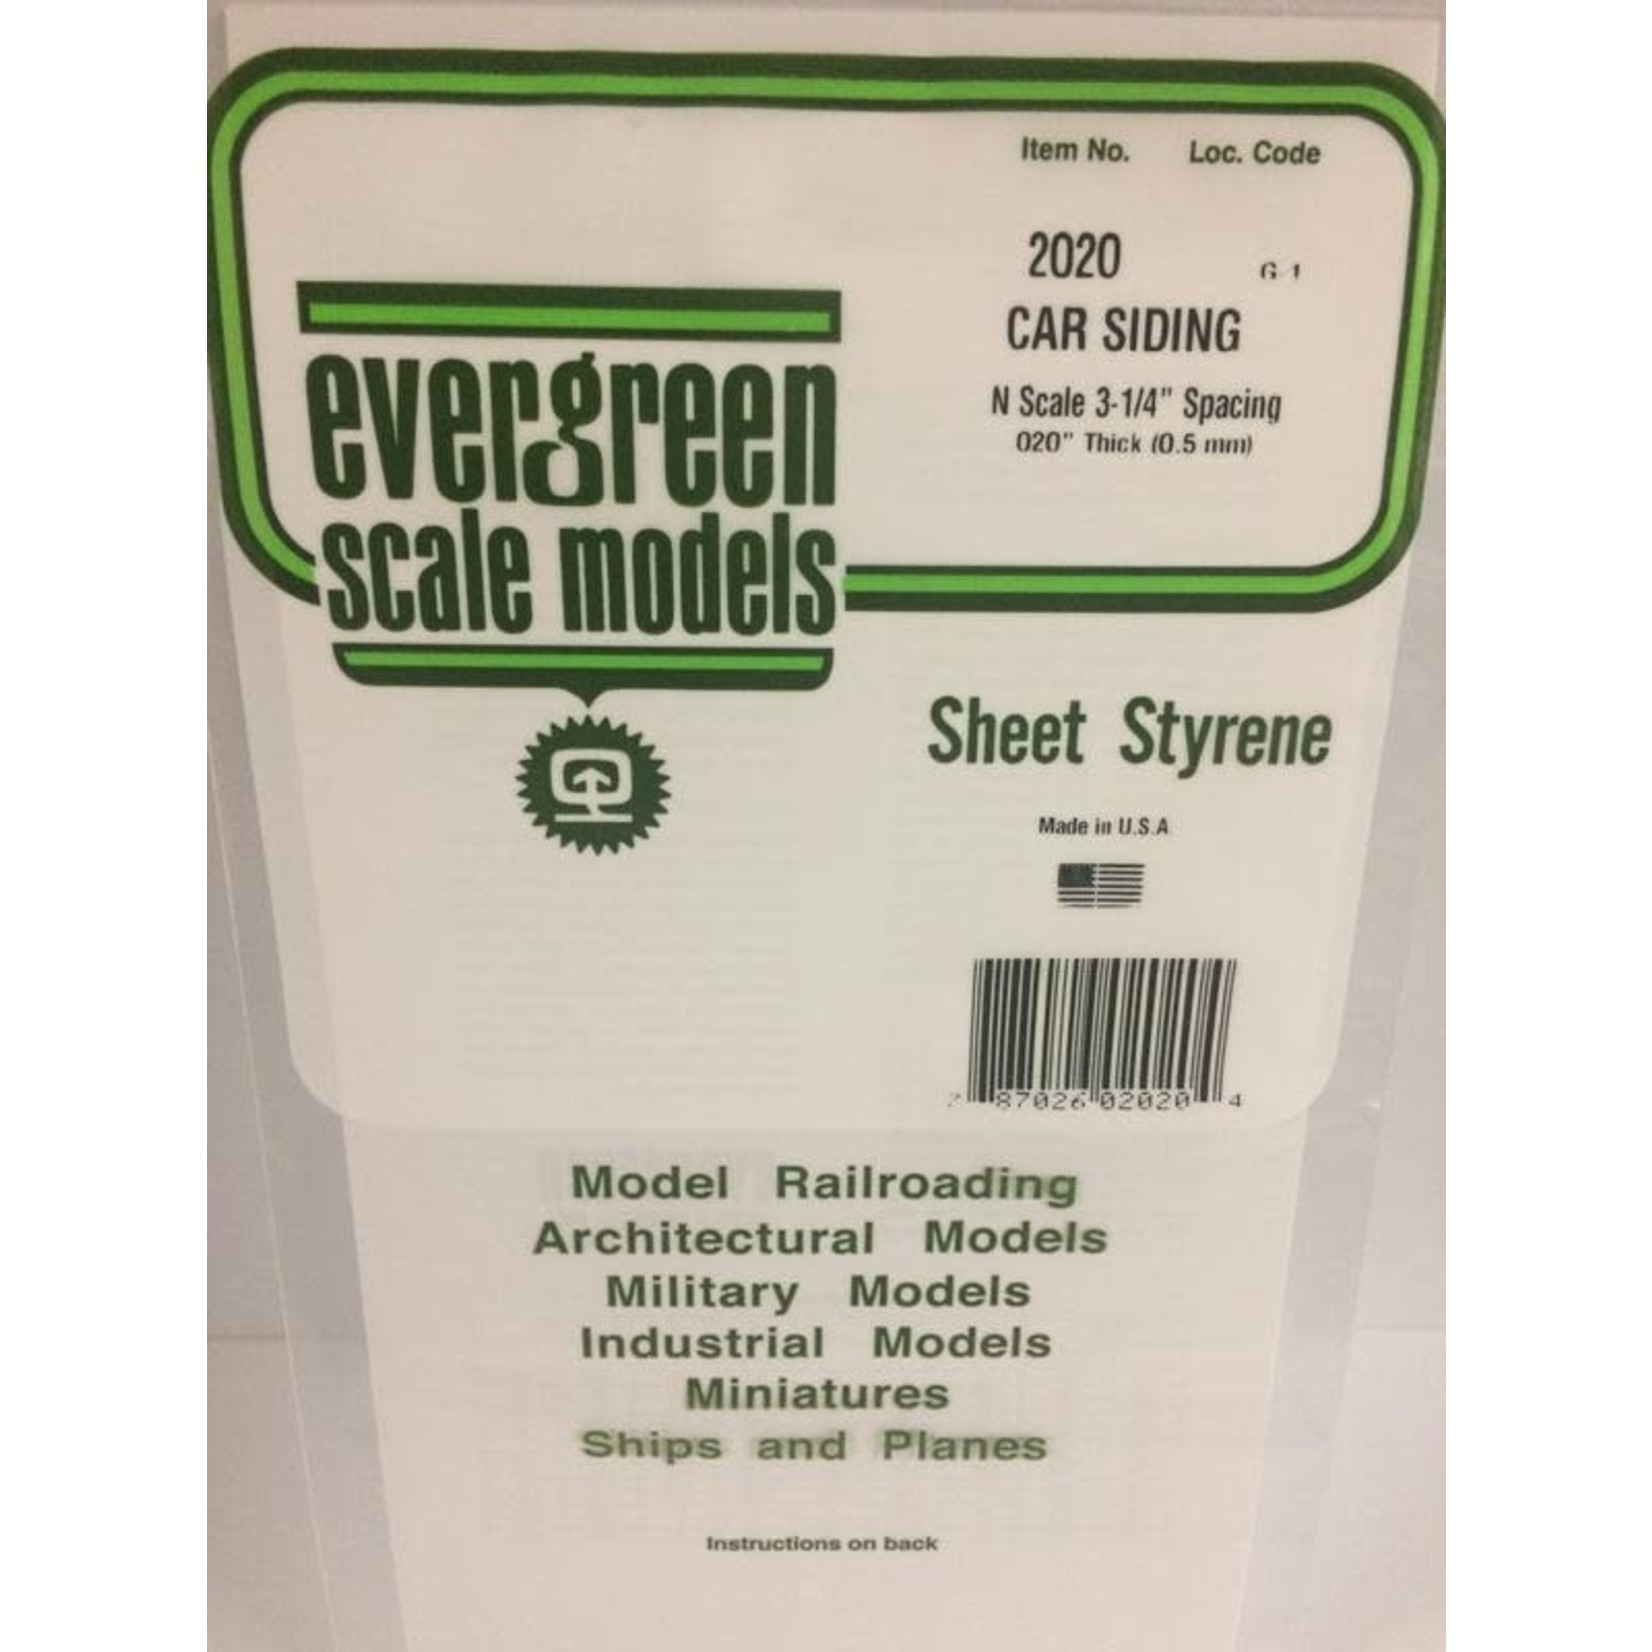 Evergreen Scale Models EVE2020 Styrene .020 N-Scale Car Siding Sheet